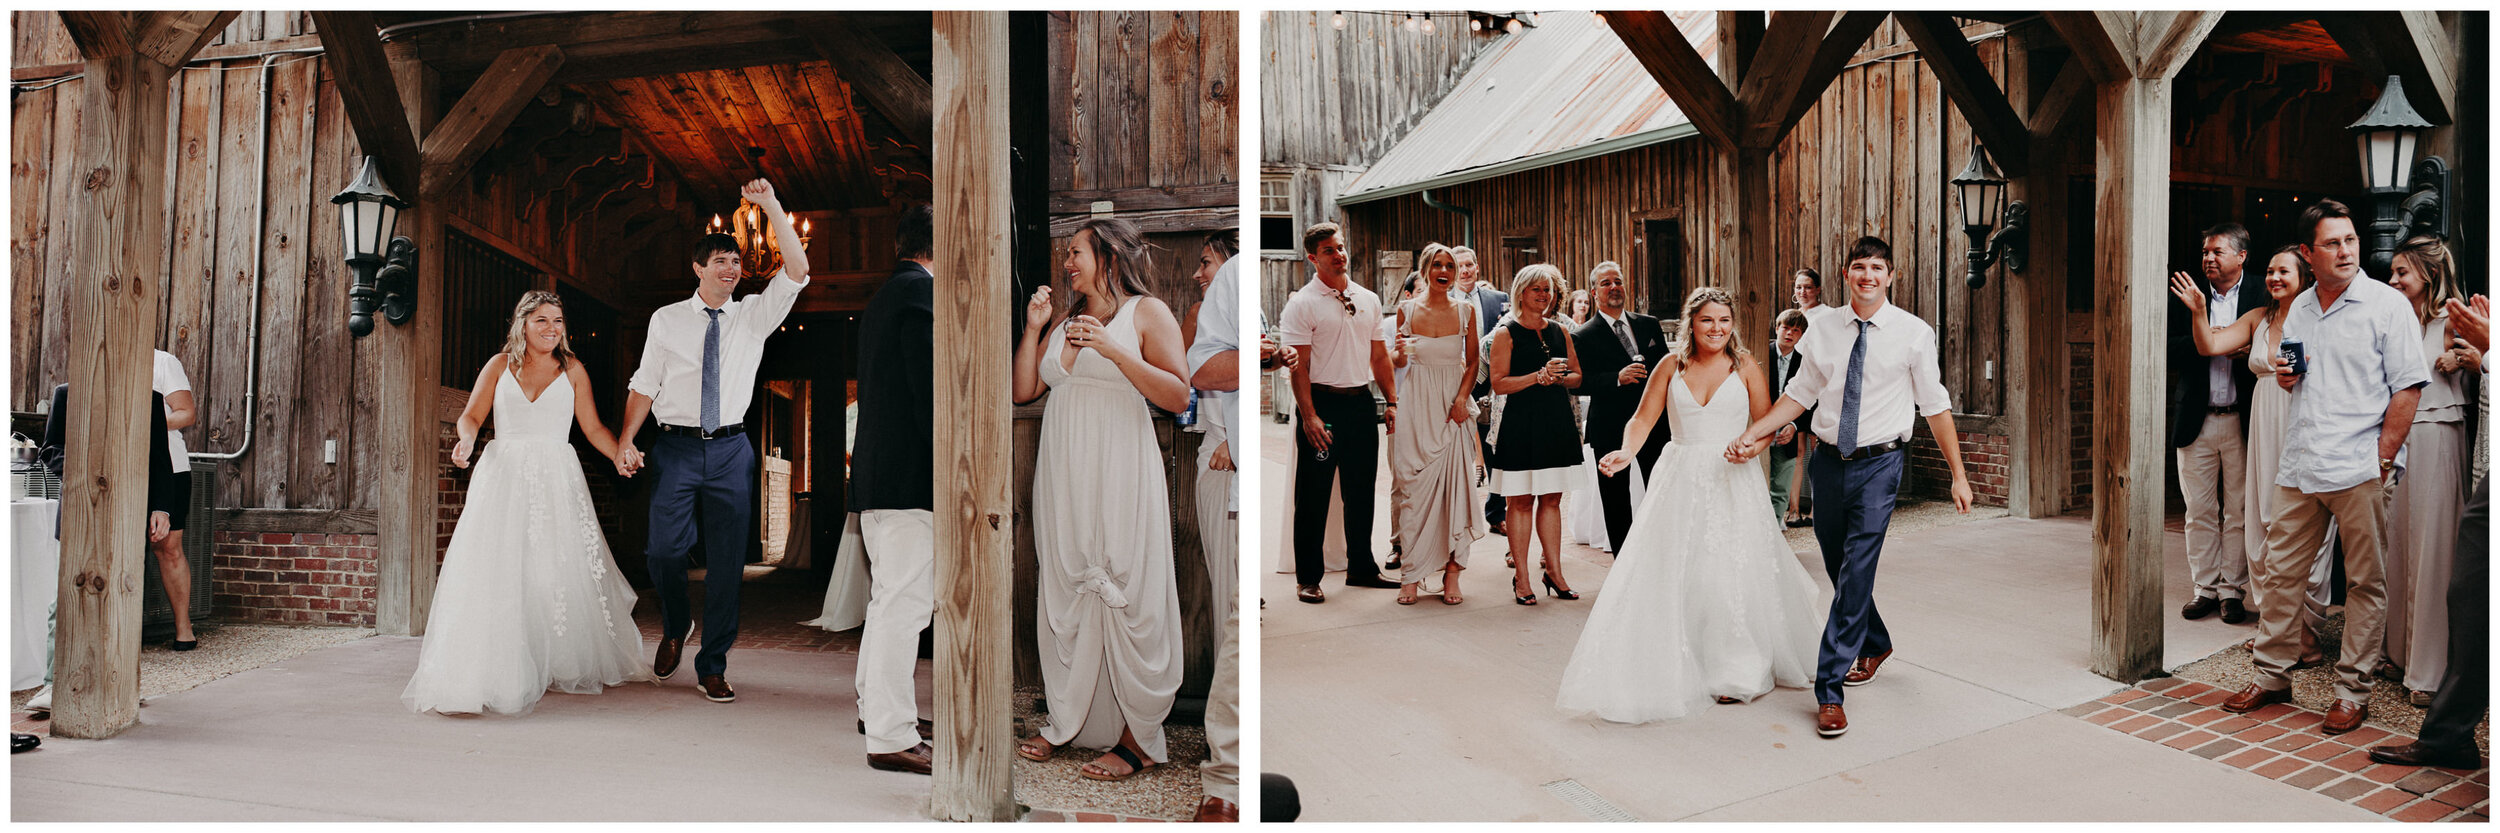 Atlanta_Wedding Day || The Farm at Rome-Ga, Aline Marin Photography90.jpg